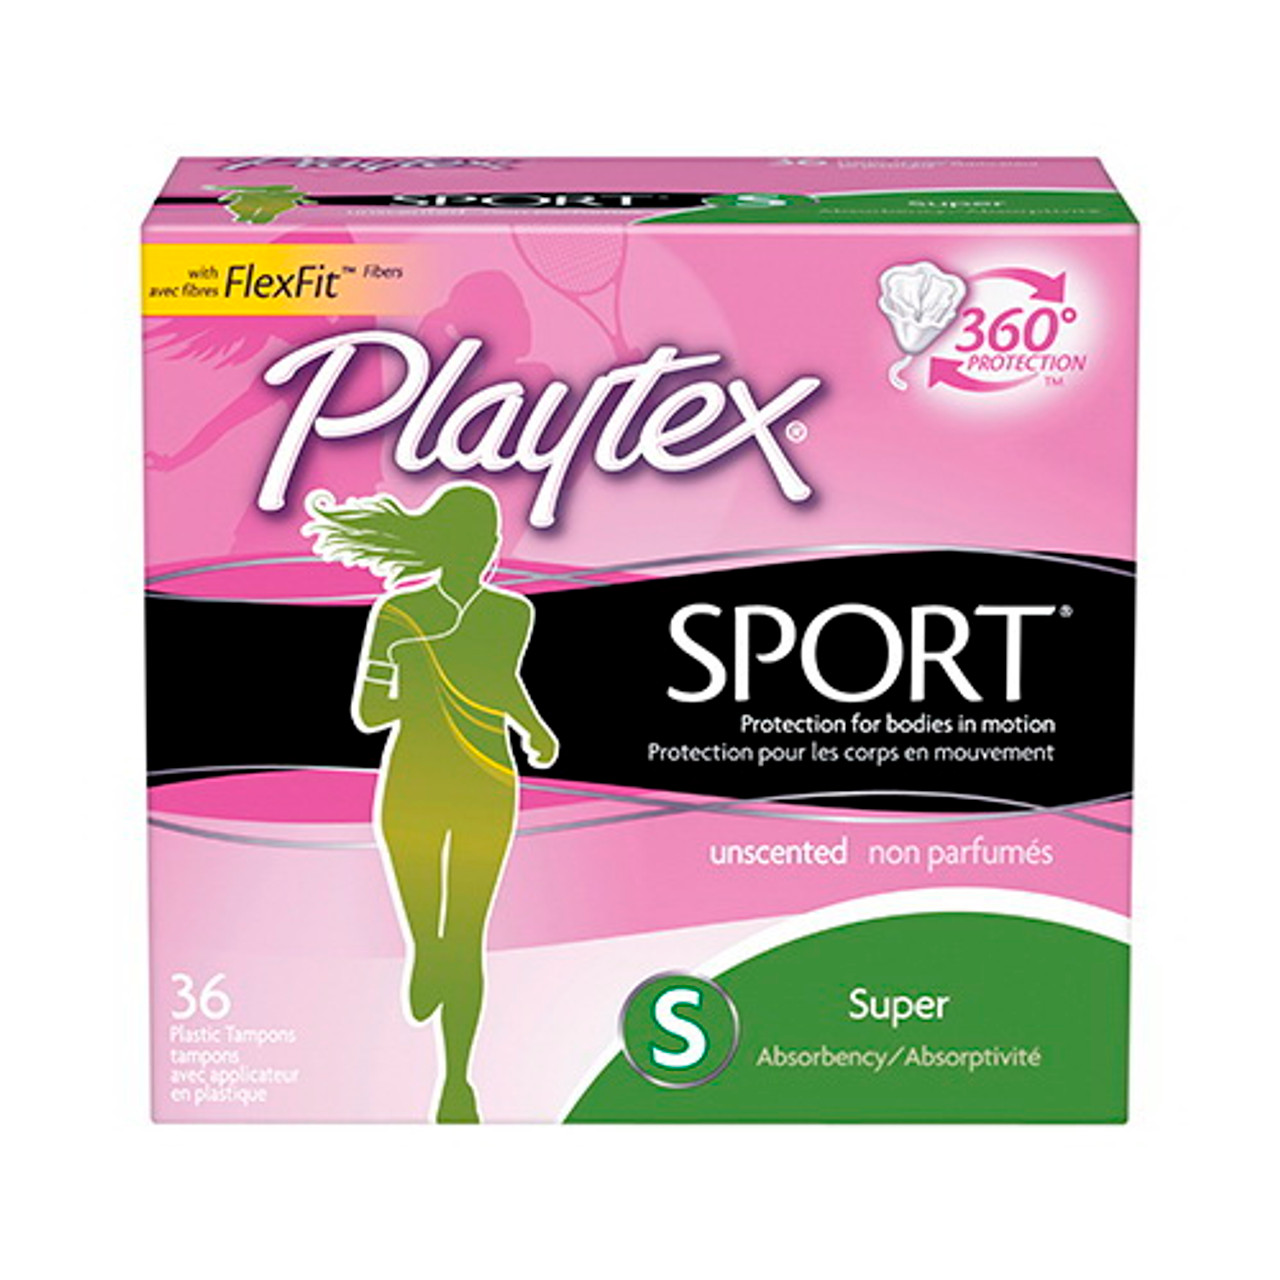 Playtex Sport Plastic Tampons, Super, Unscented, 36 Ea 